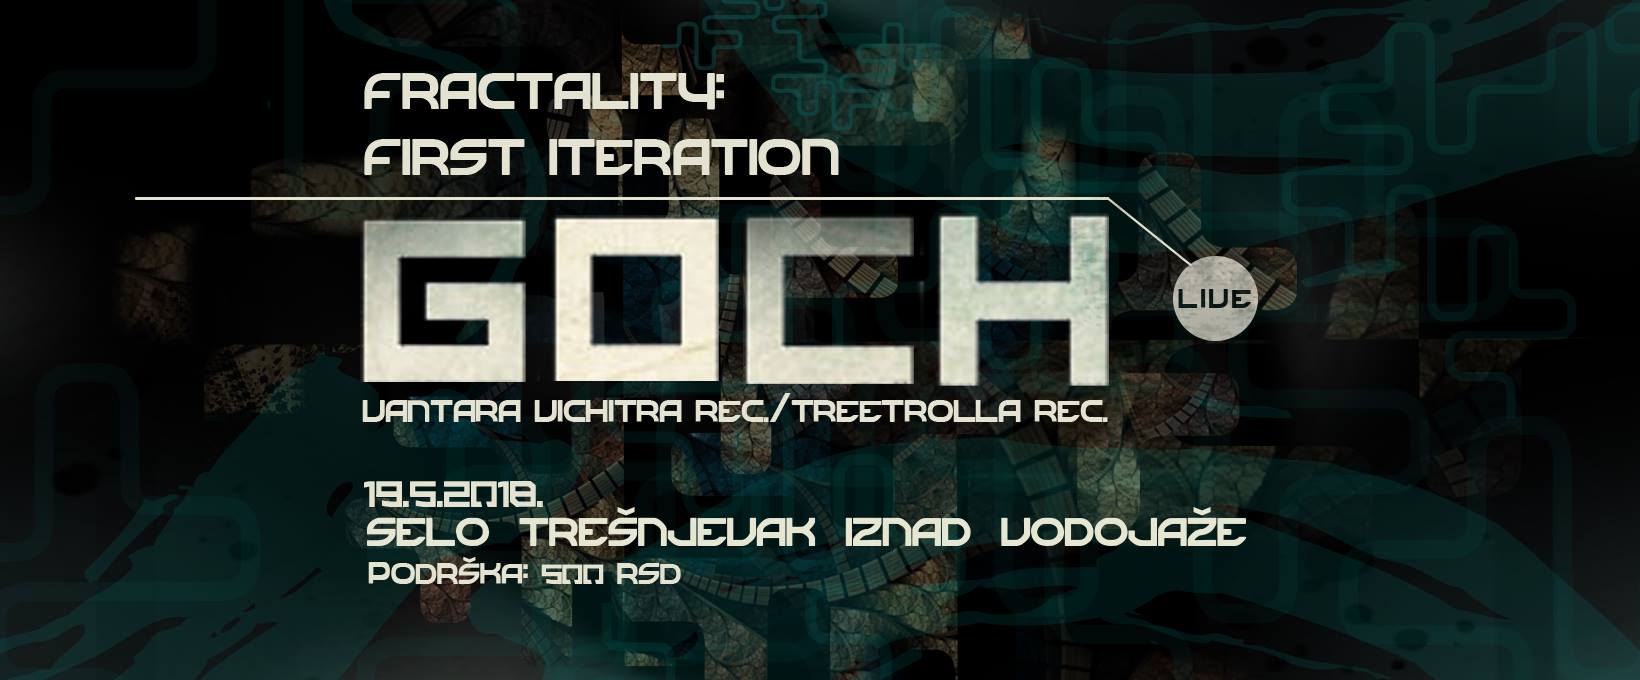 Fractality: First Iteration, featuring Goch Live 19.05.2018.Trešnjevak